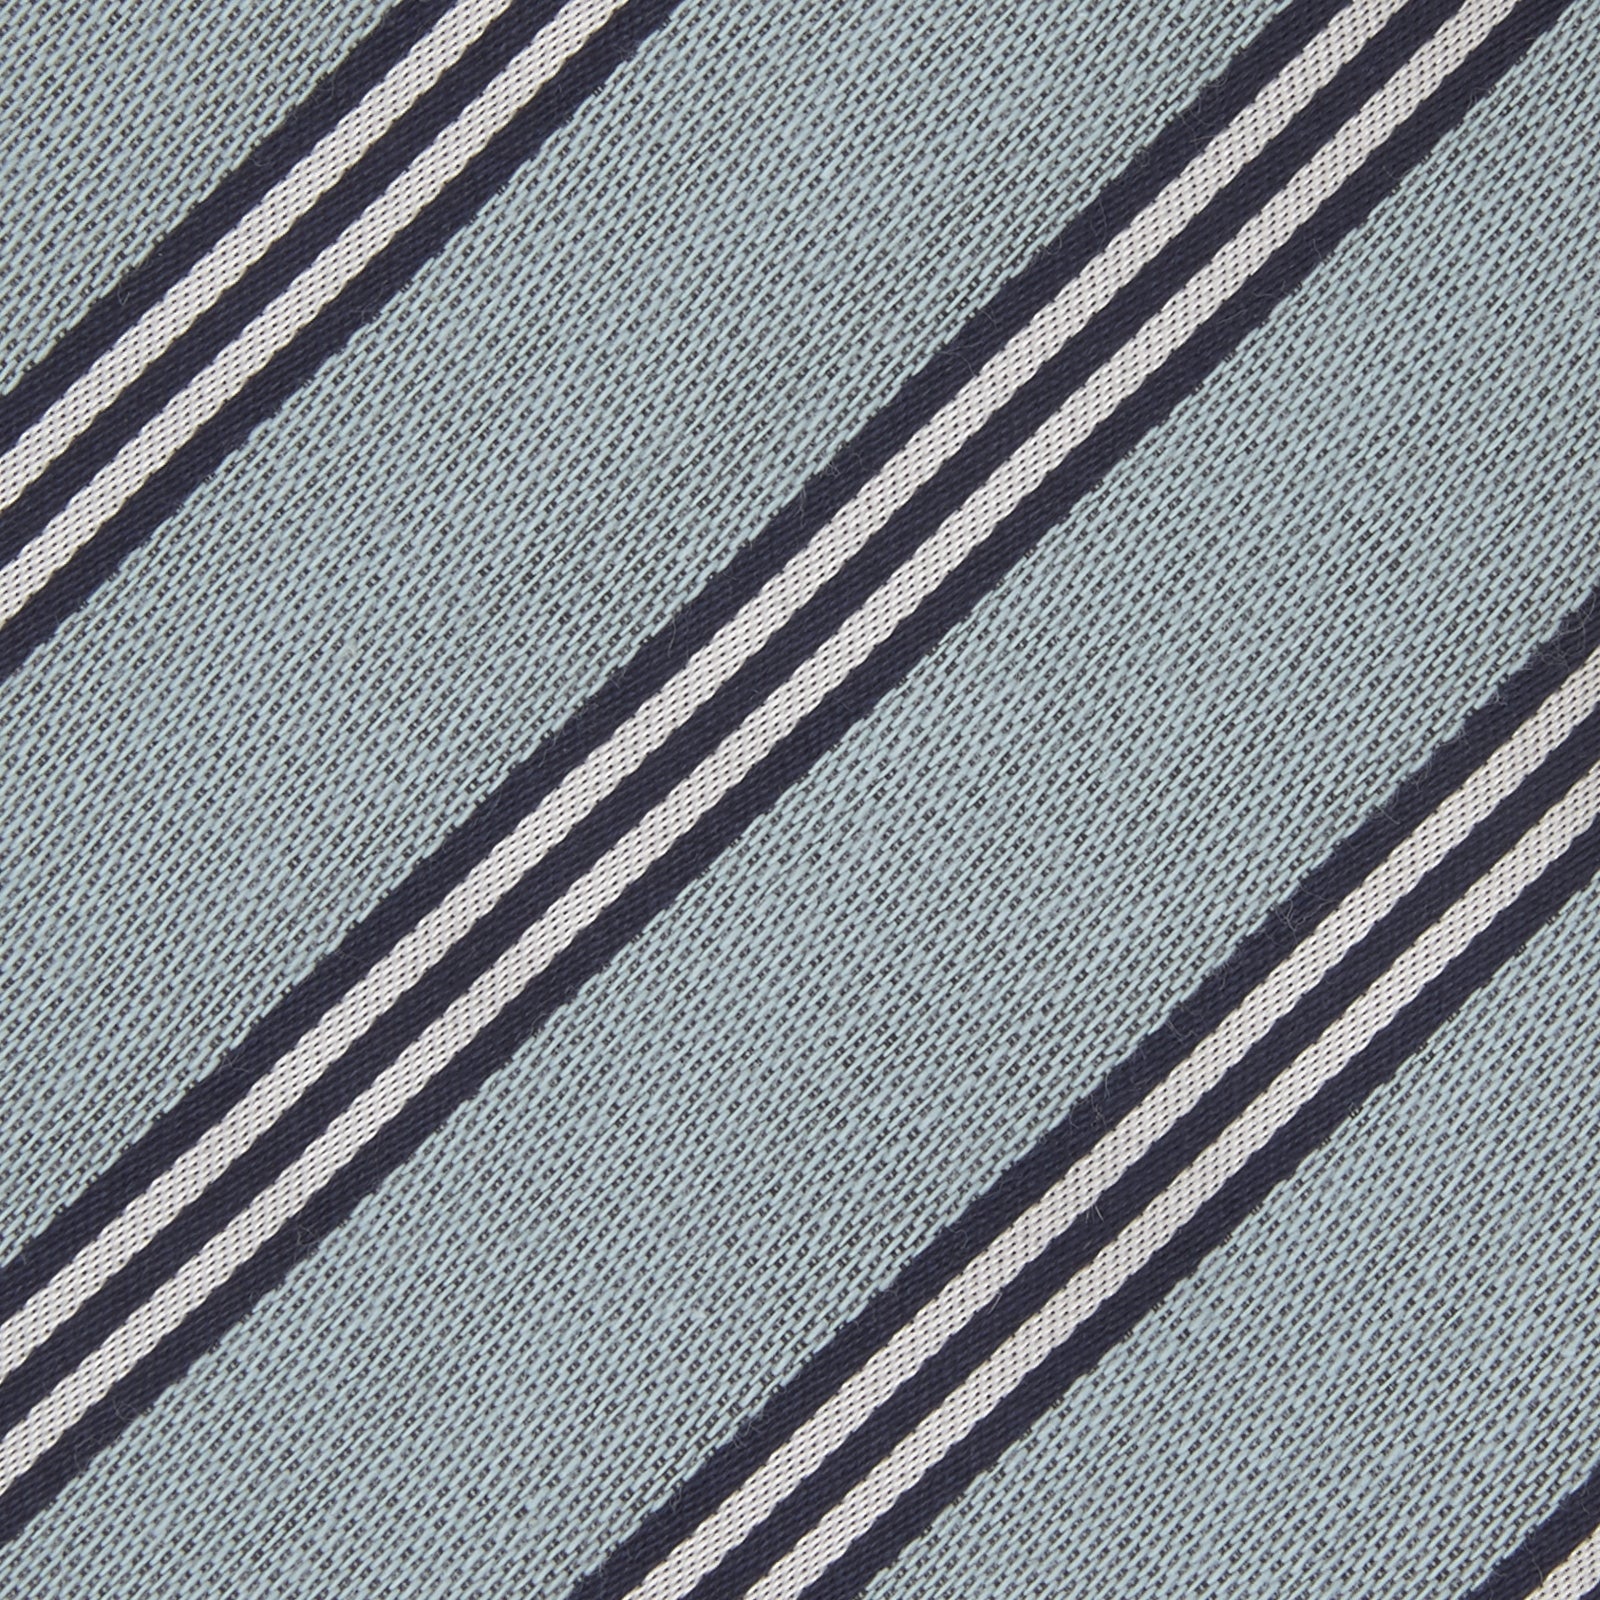 Powder Blue Diagonal Stripe Cotton and Silk Tie